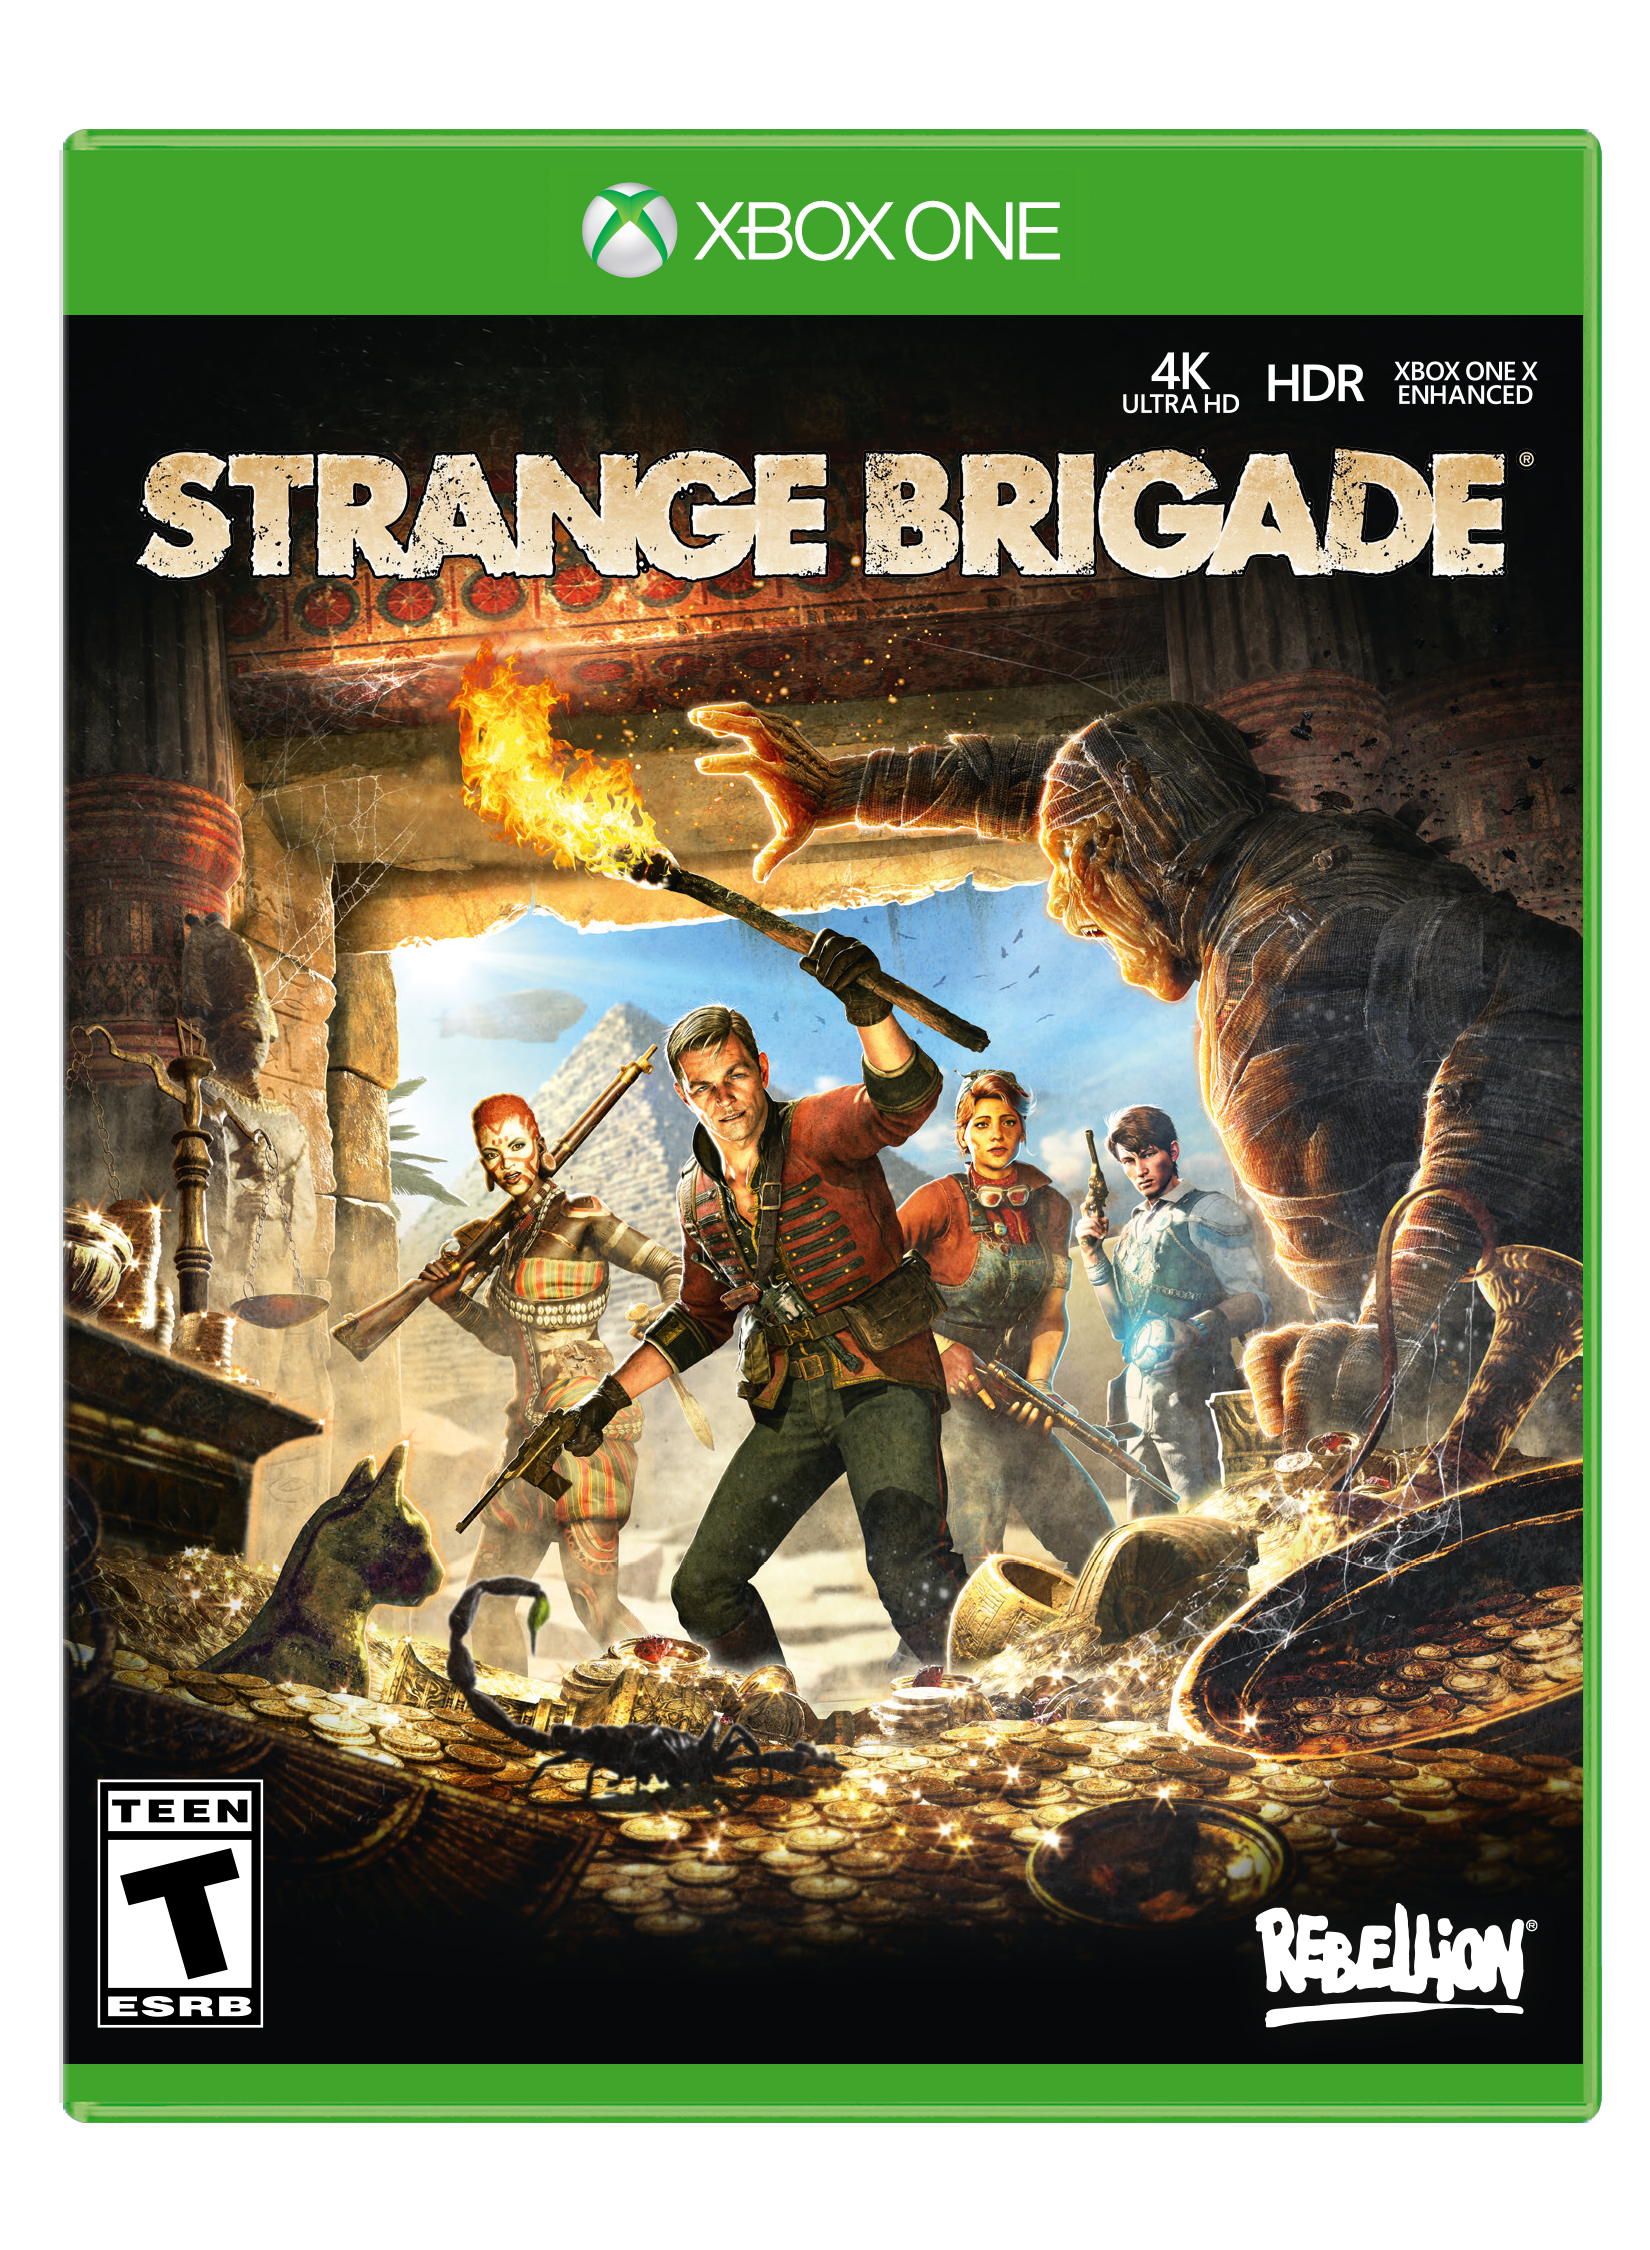 Strange Brigade - Xbox One | Rebellion Interactive | GameStop